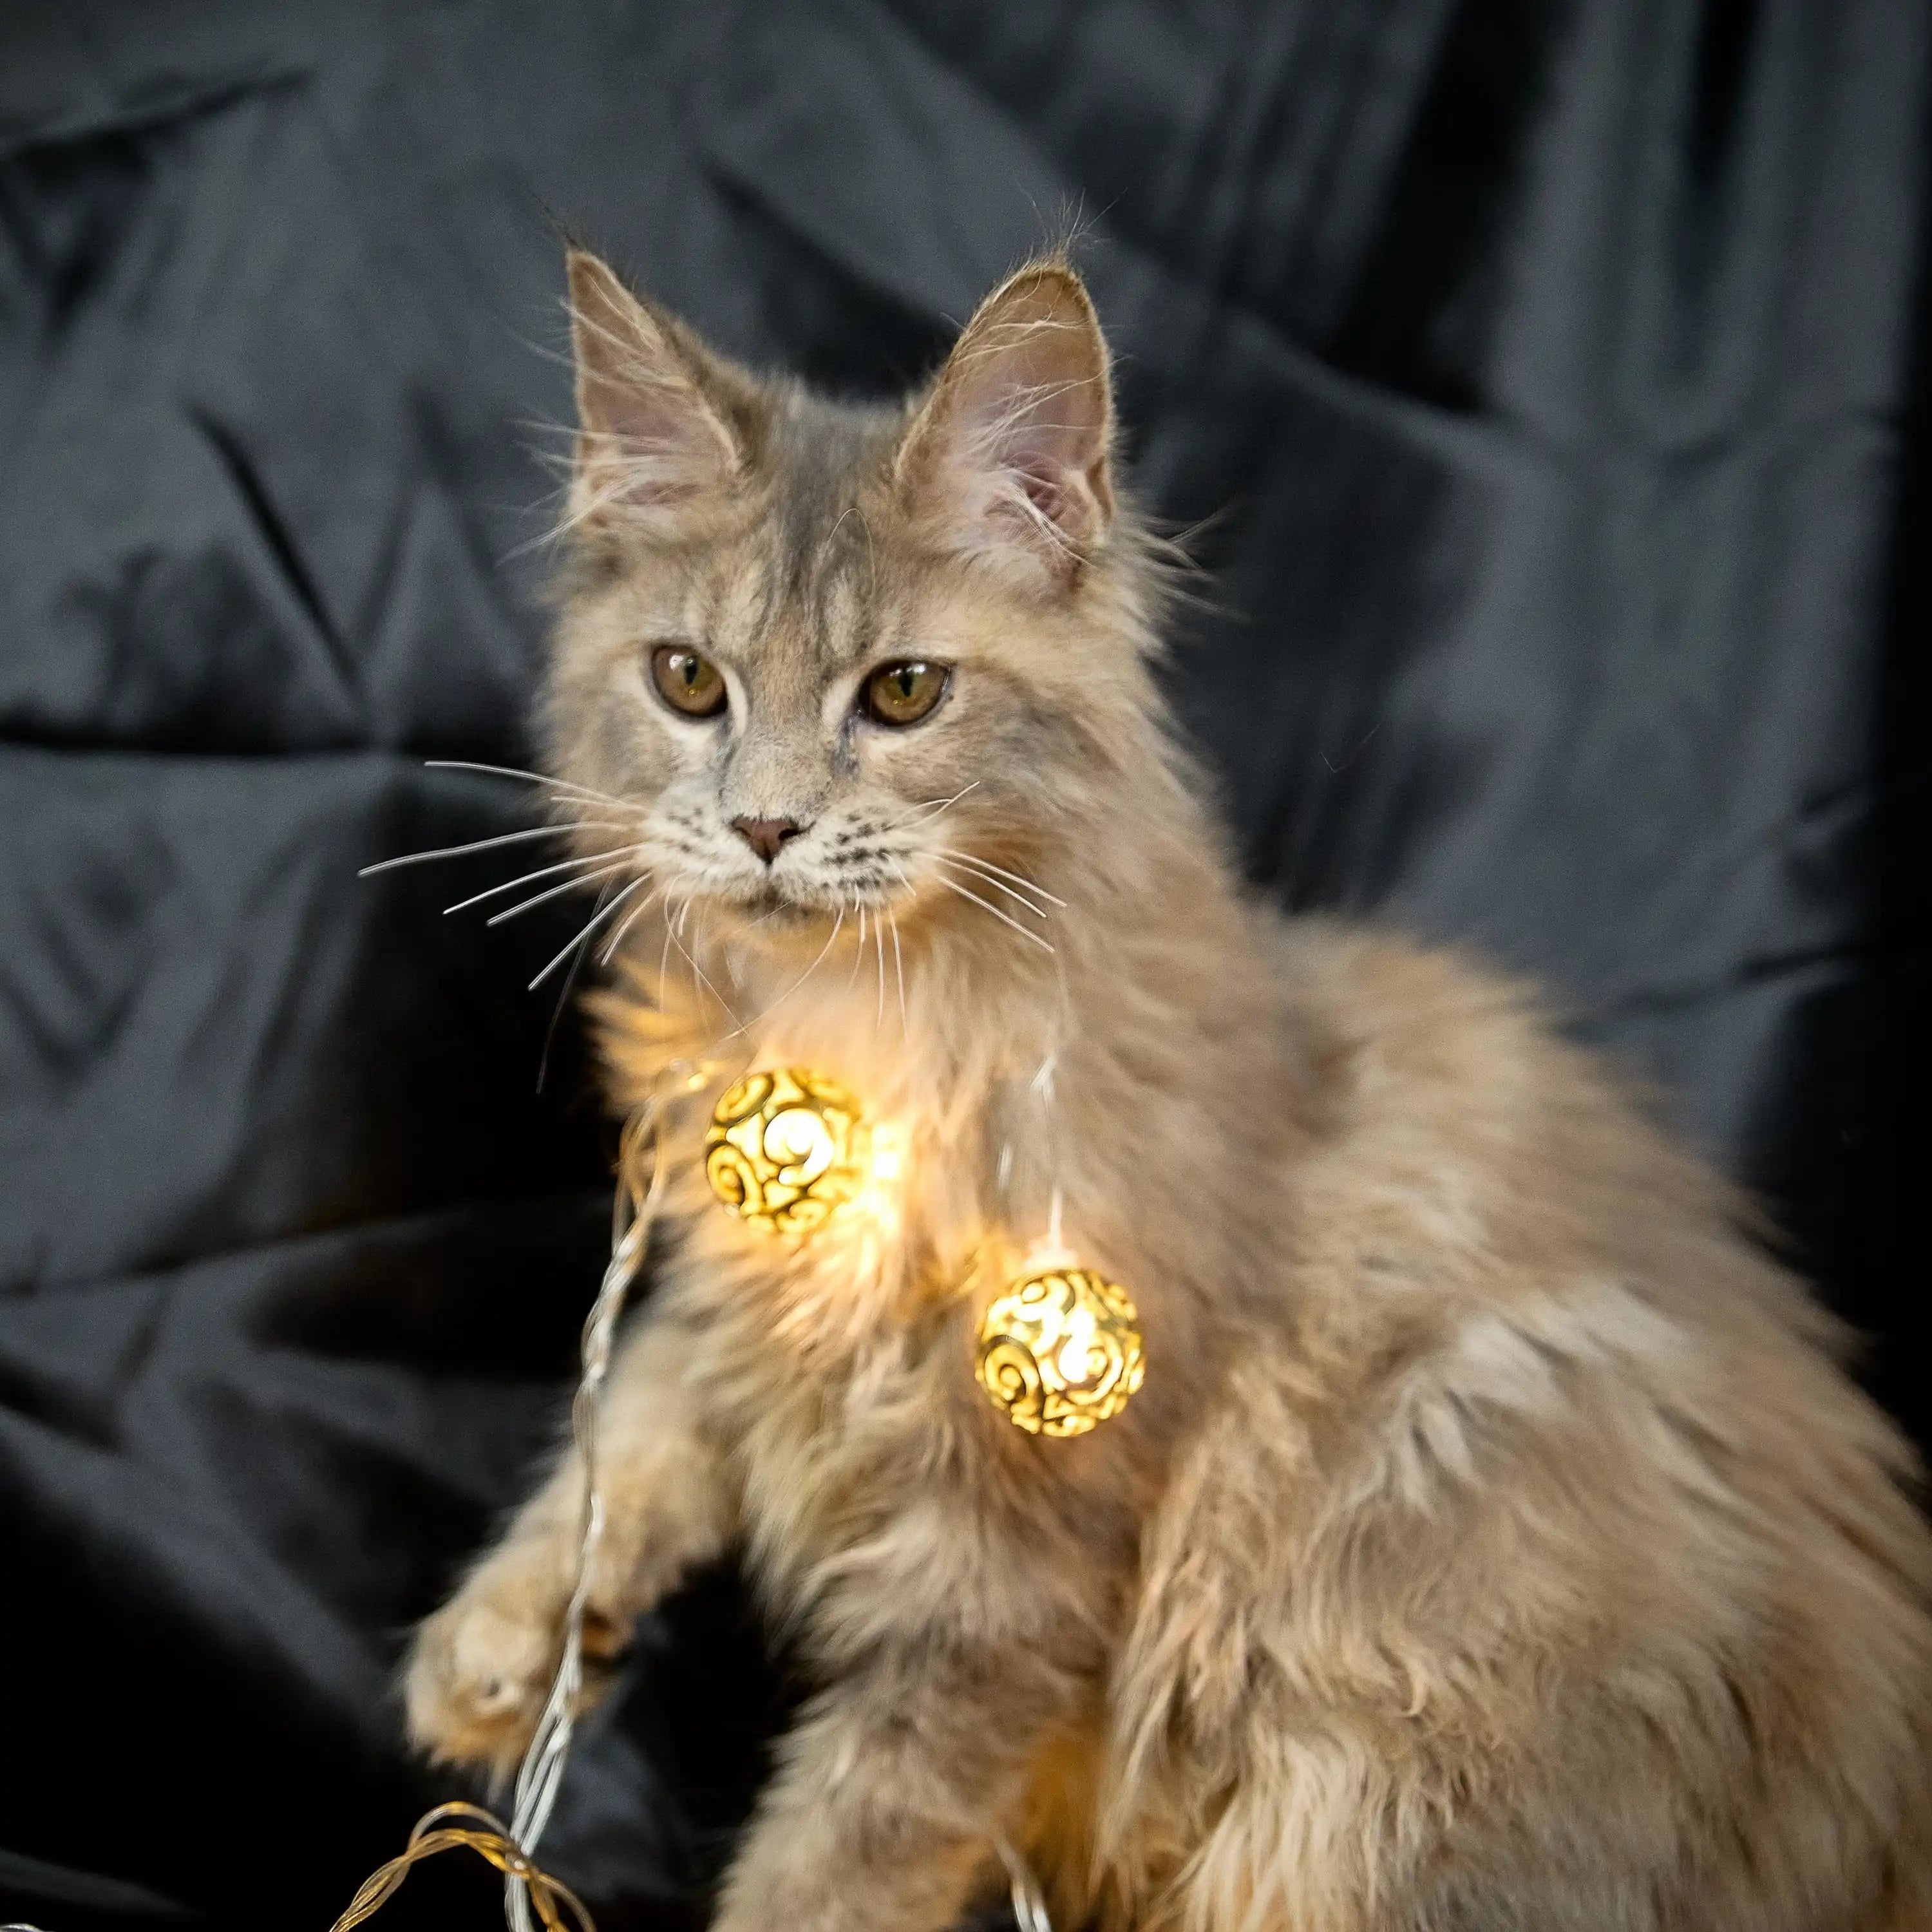 Maine Coon Kittens for Sale Barbara | Kitten